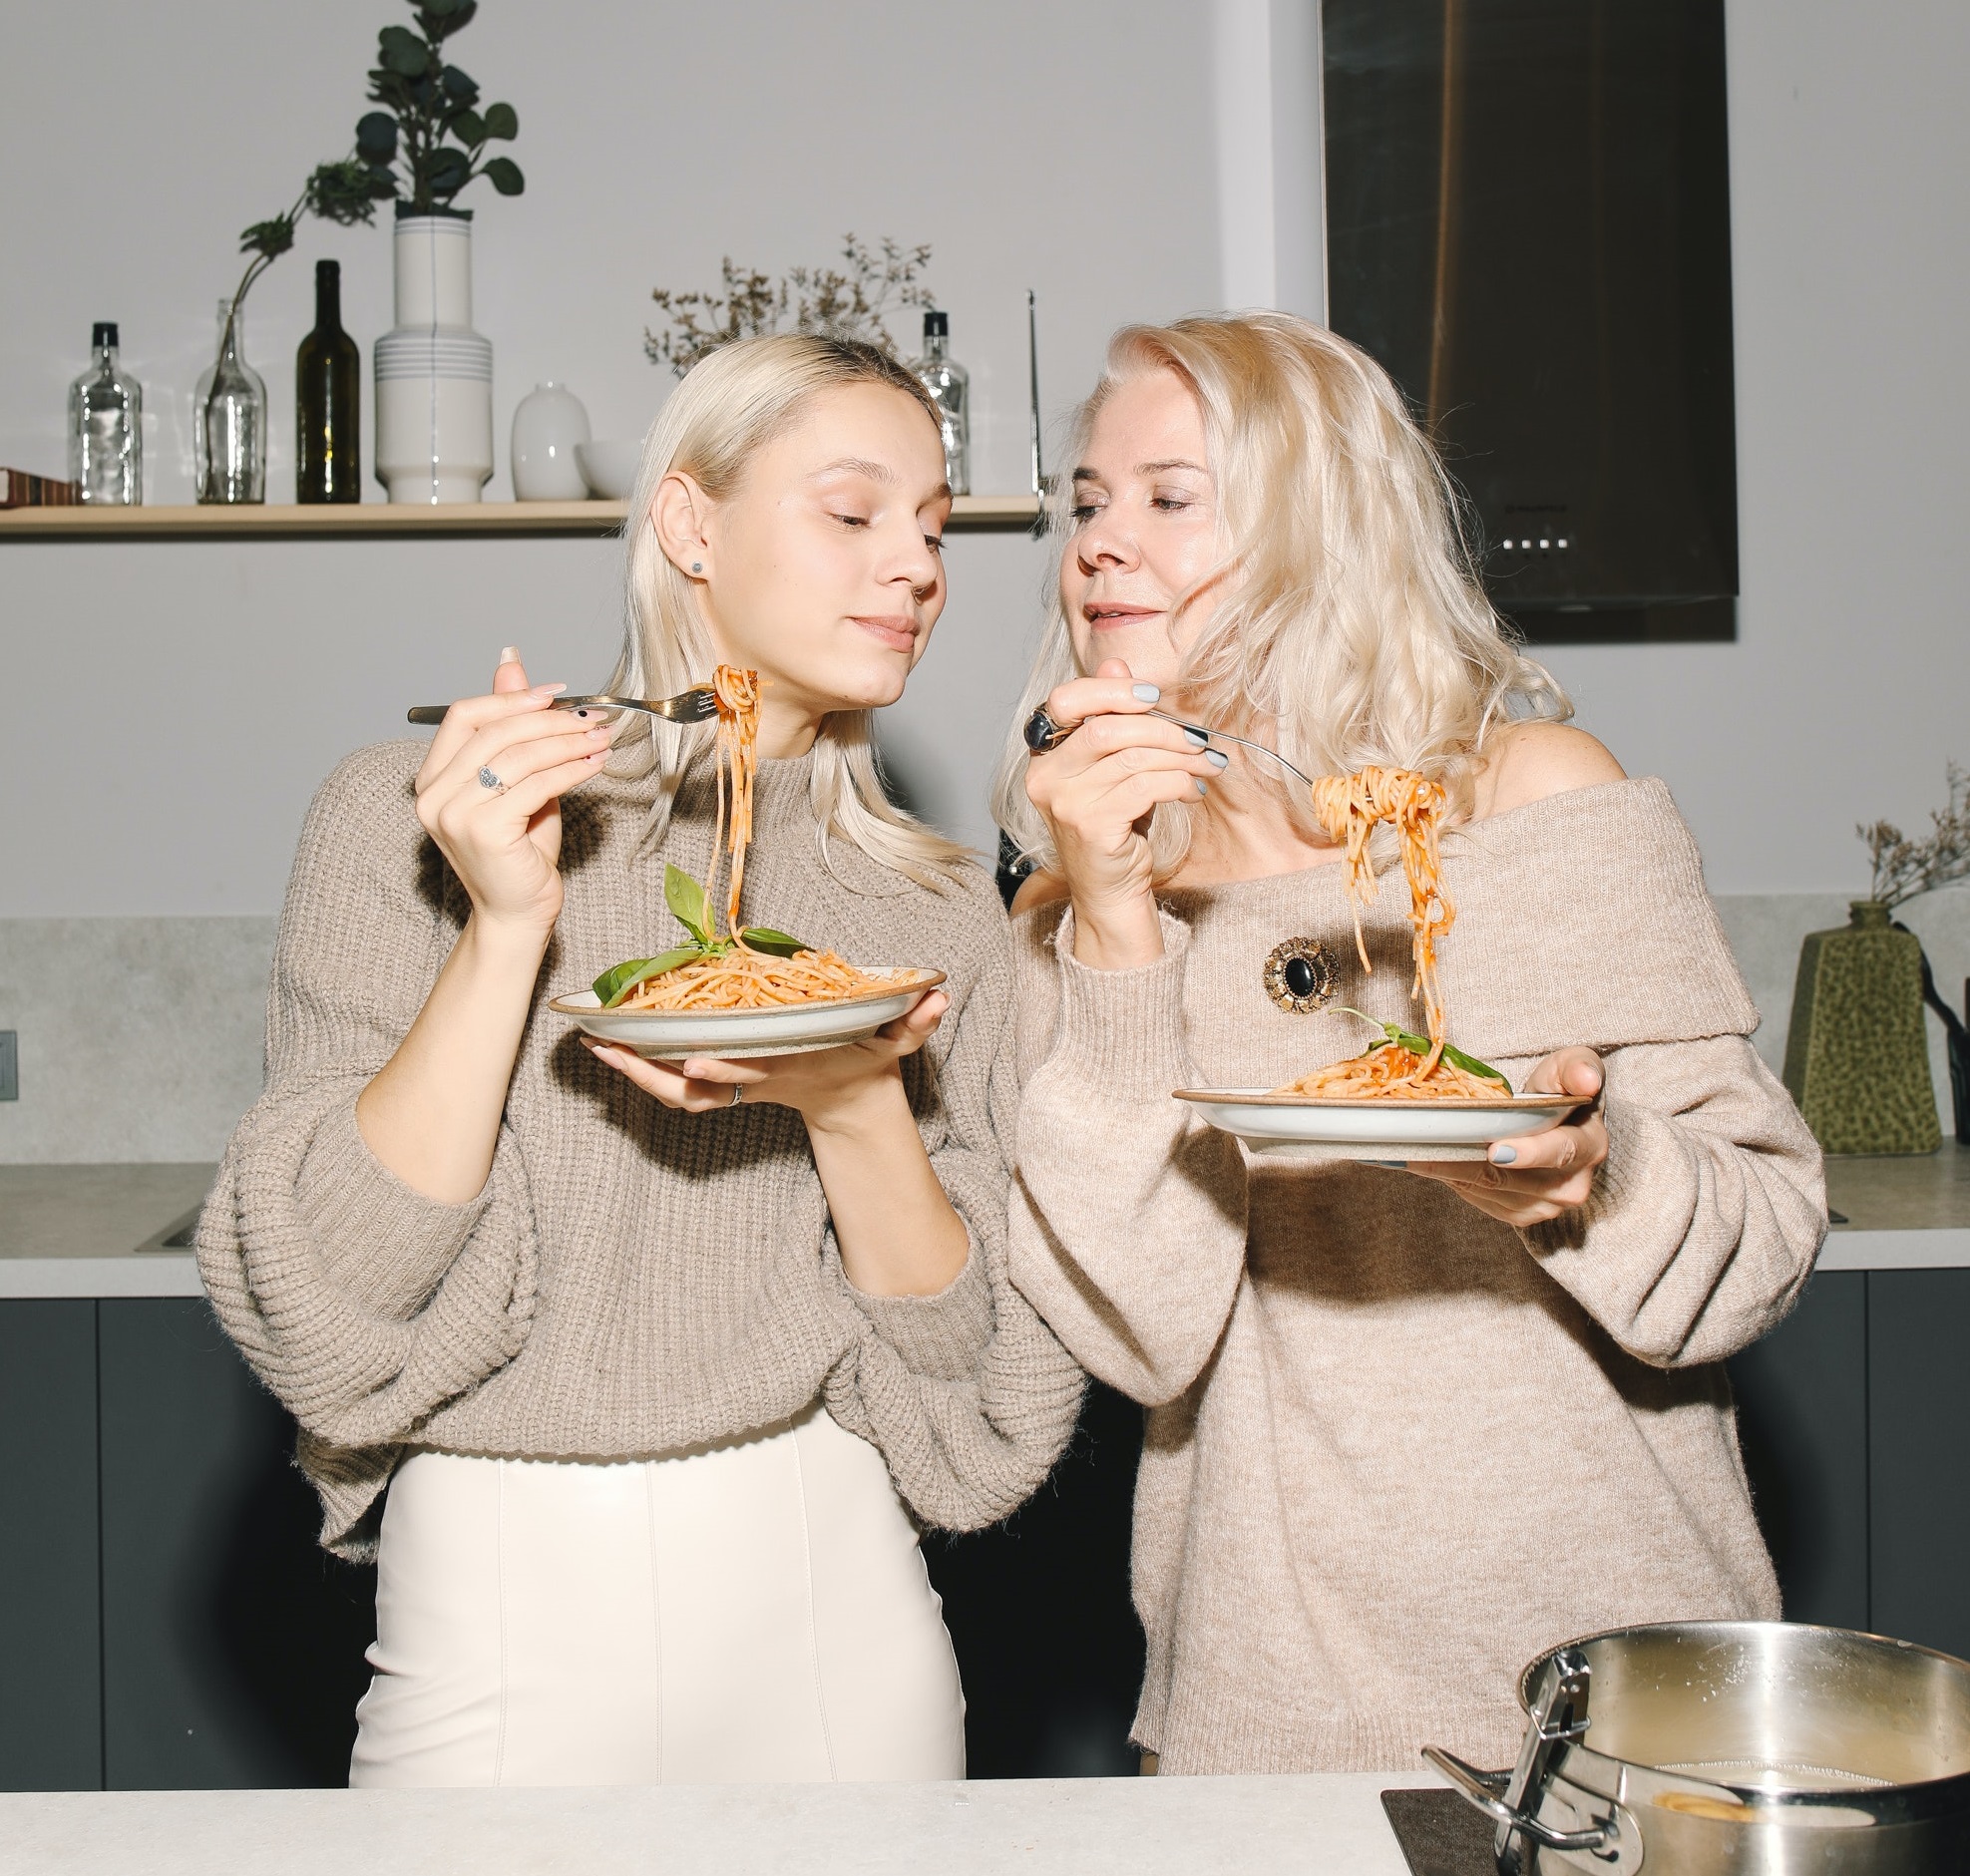 Two women enjoy pasta together